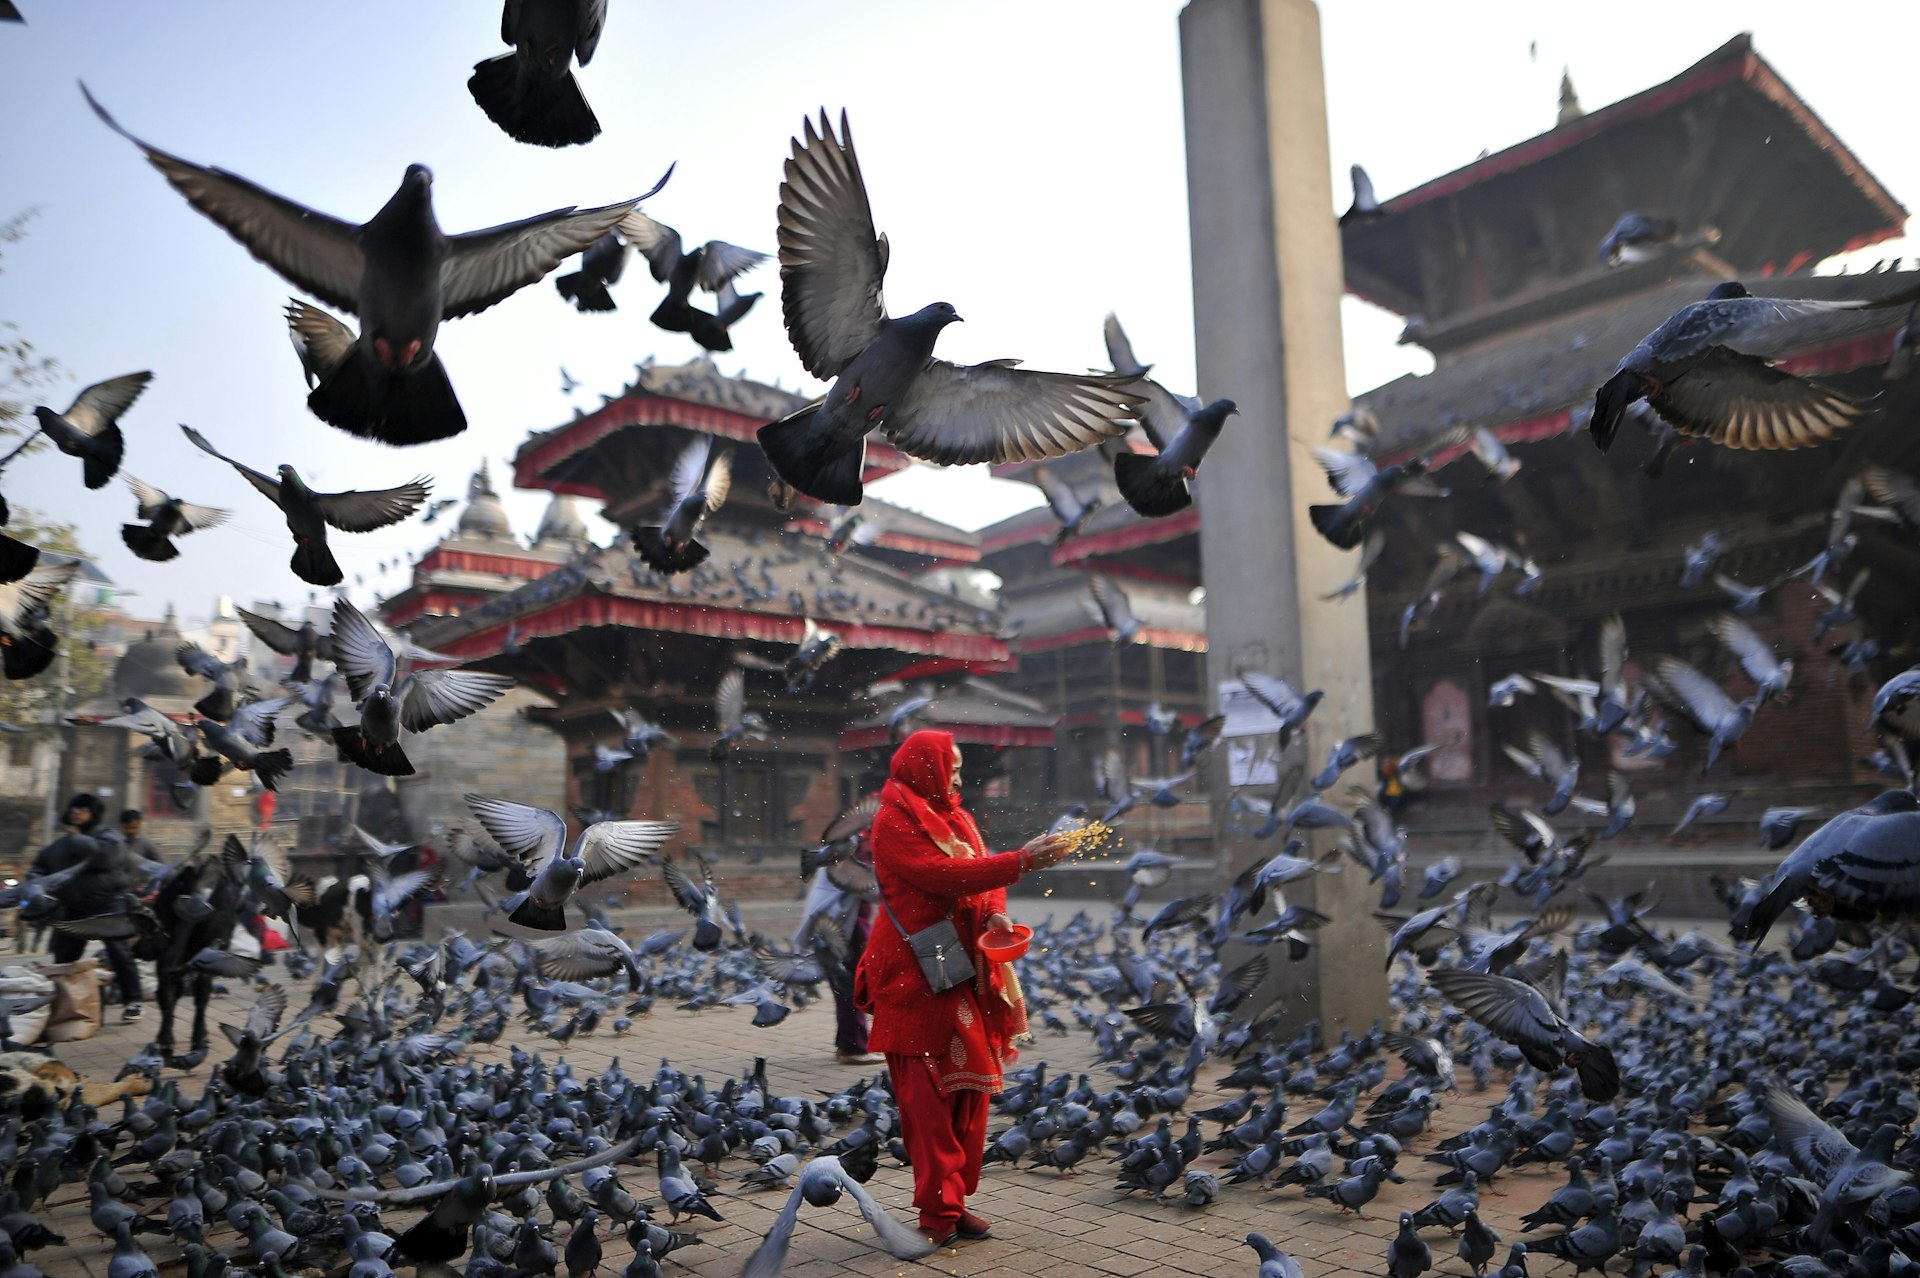 A woman feeding birds in Kathmandu Durbar Square